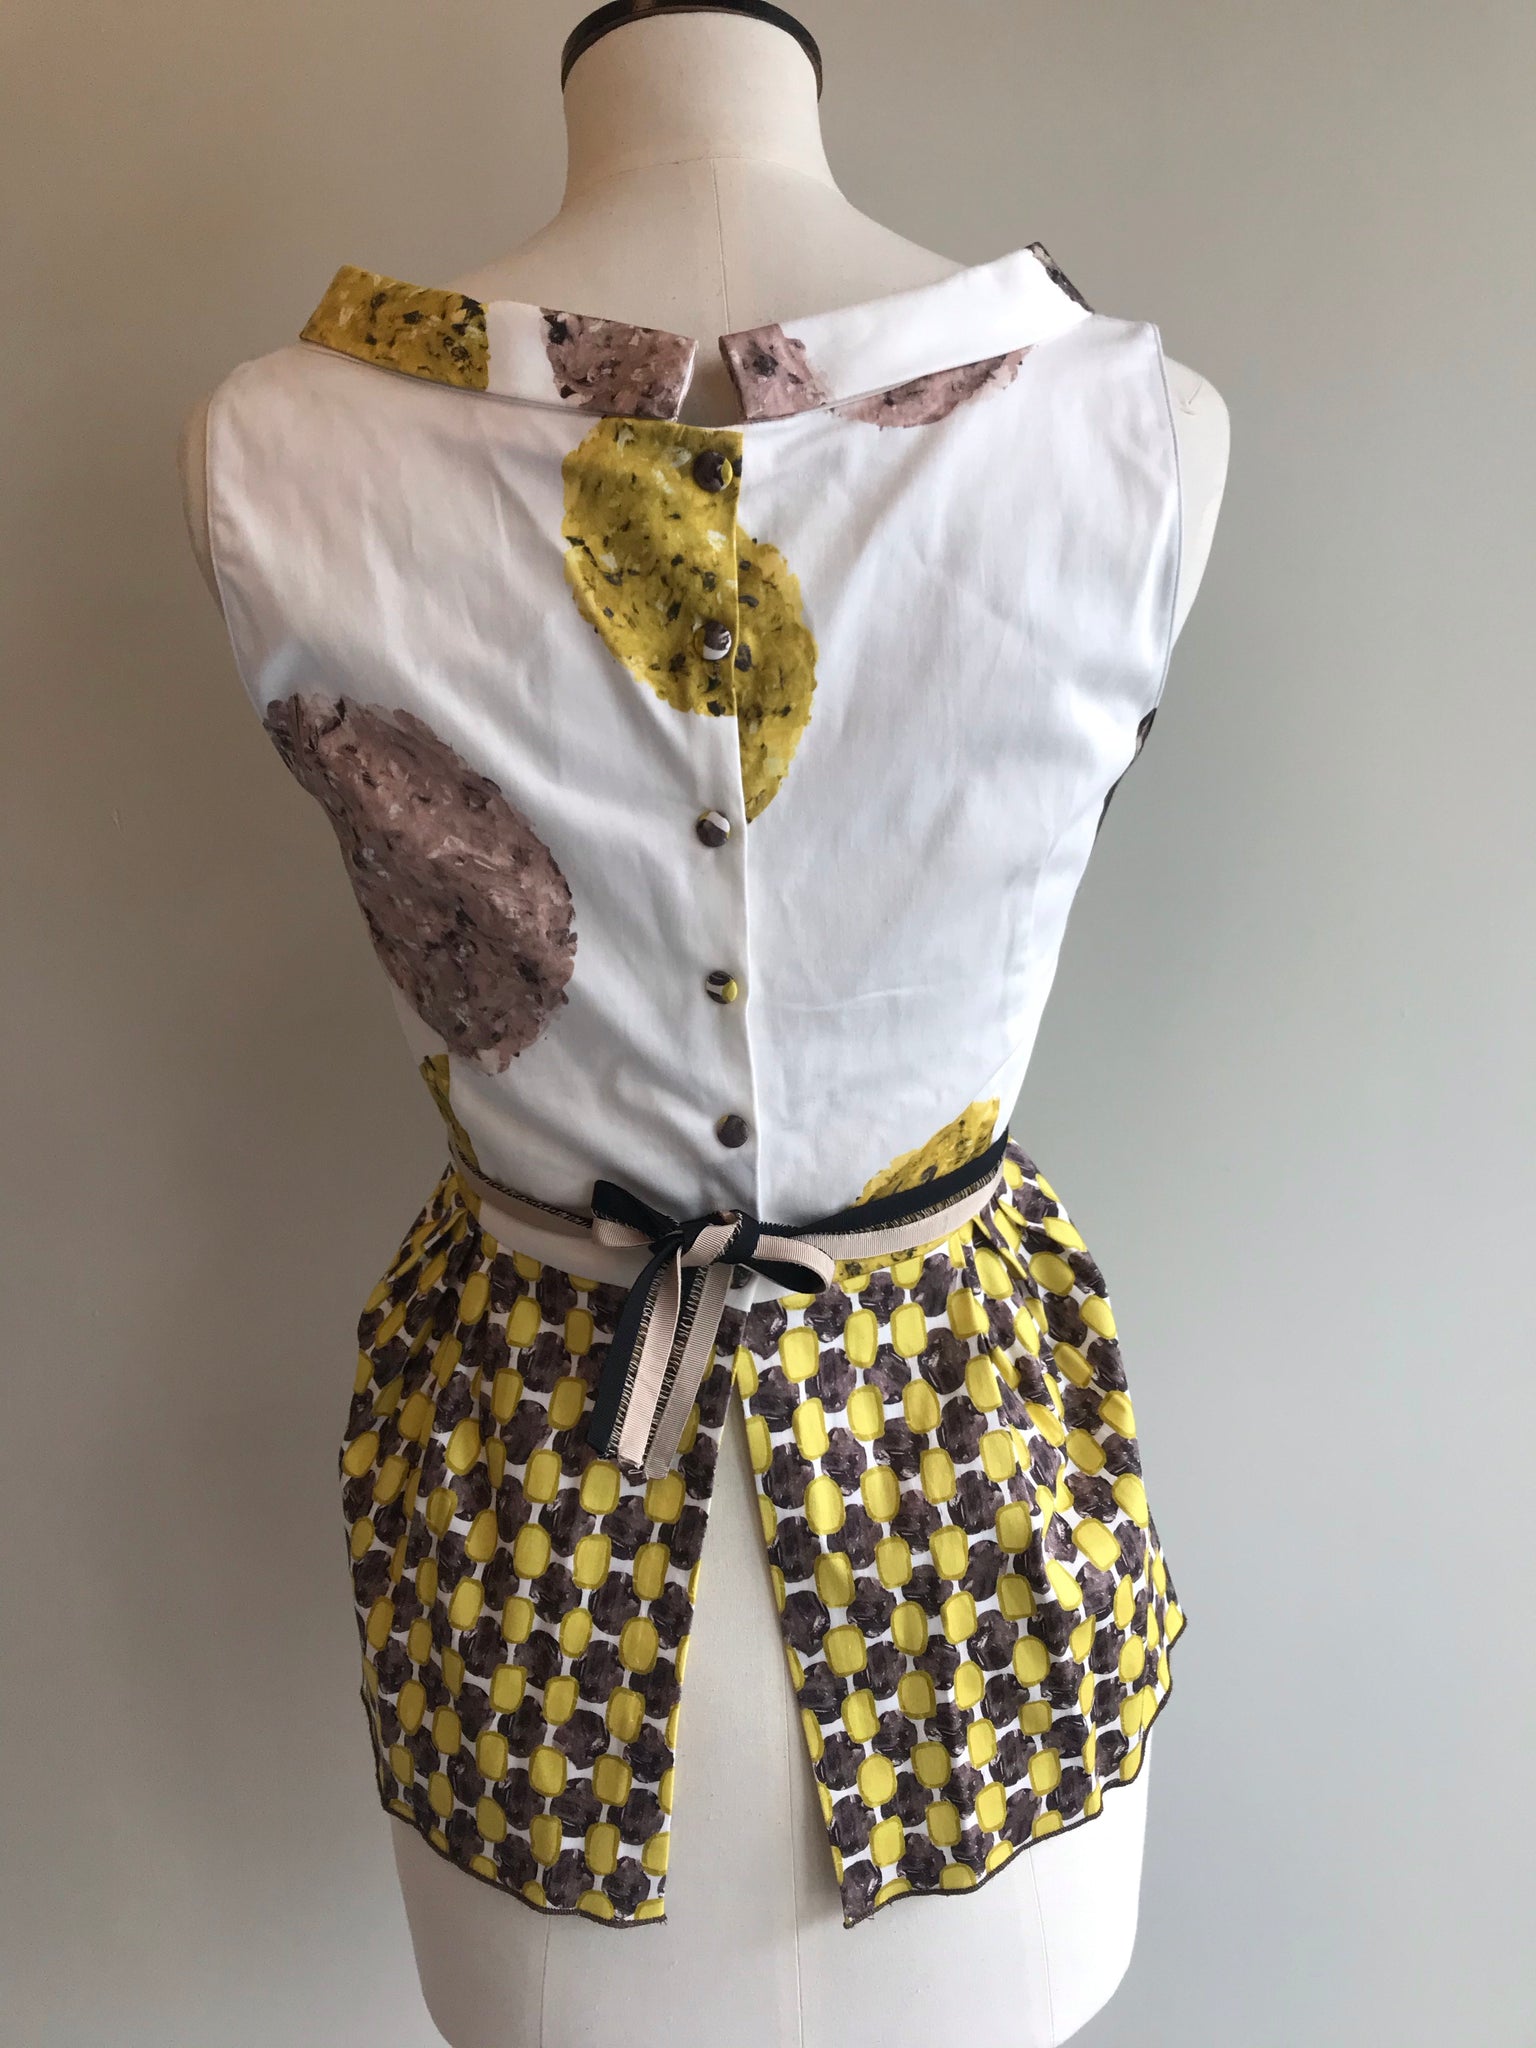 Isabella's Wardrobe Lavia Audrey Hepburn Style Top.